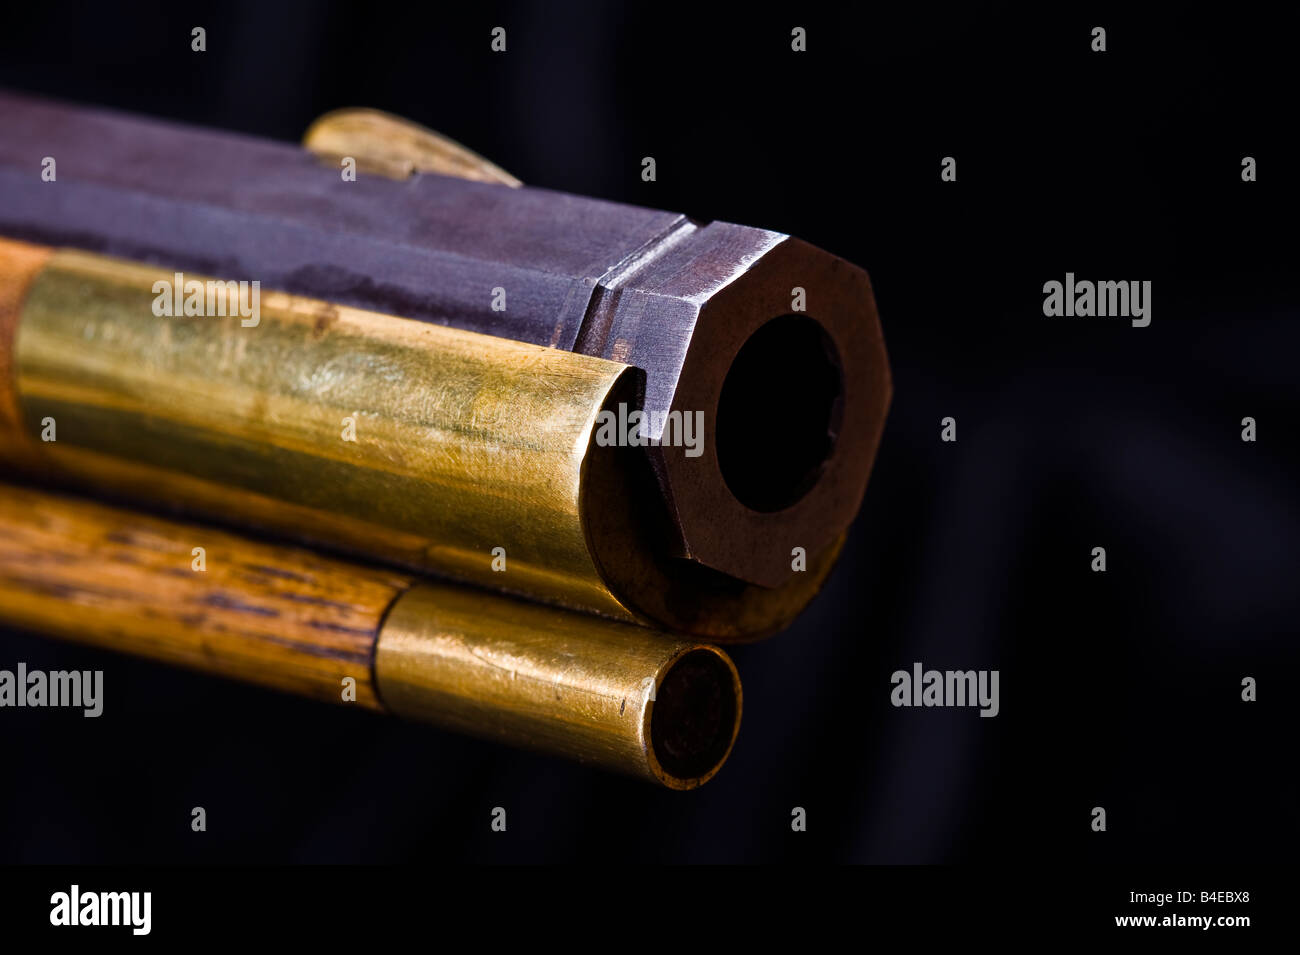 Hocico flint rifle de bloqueo Foto de stock